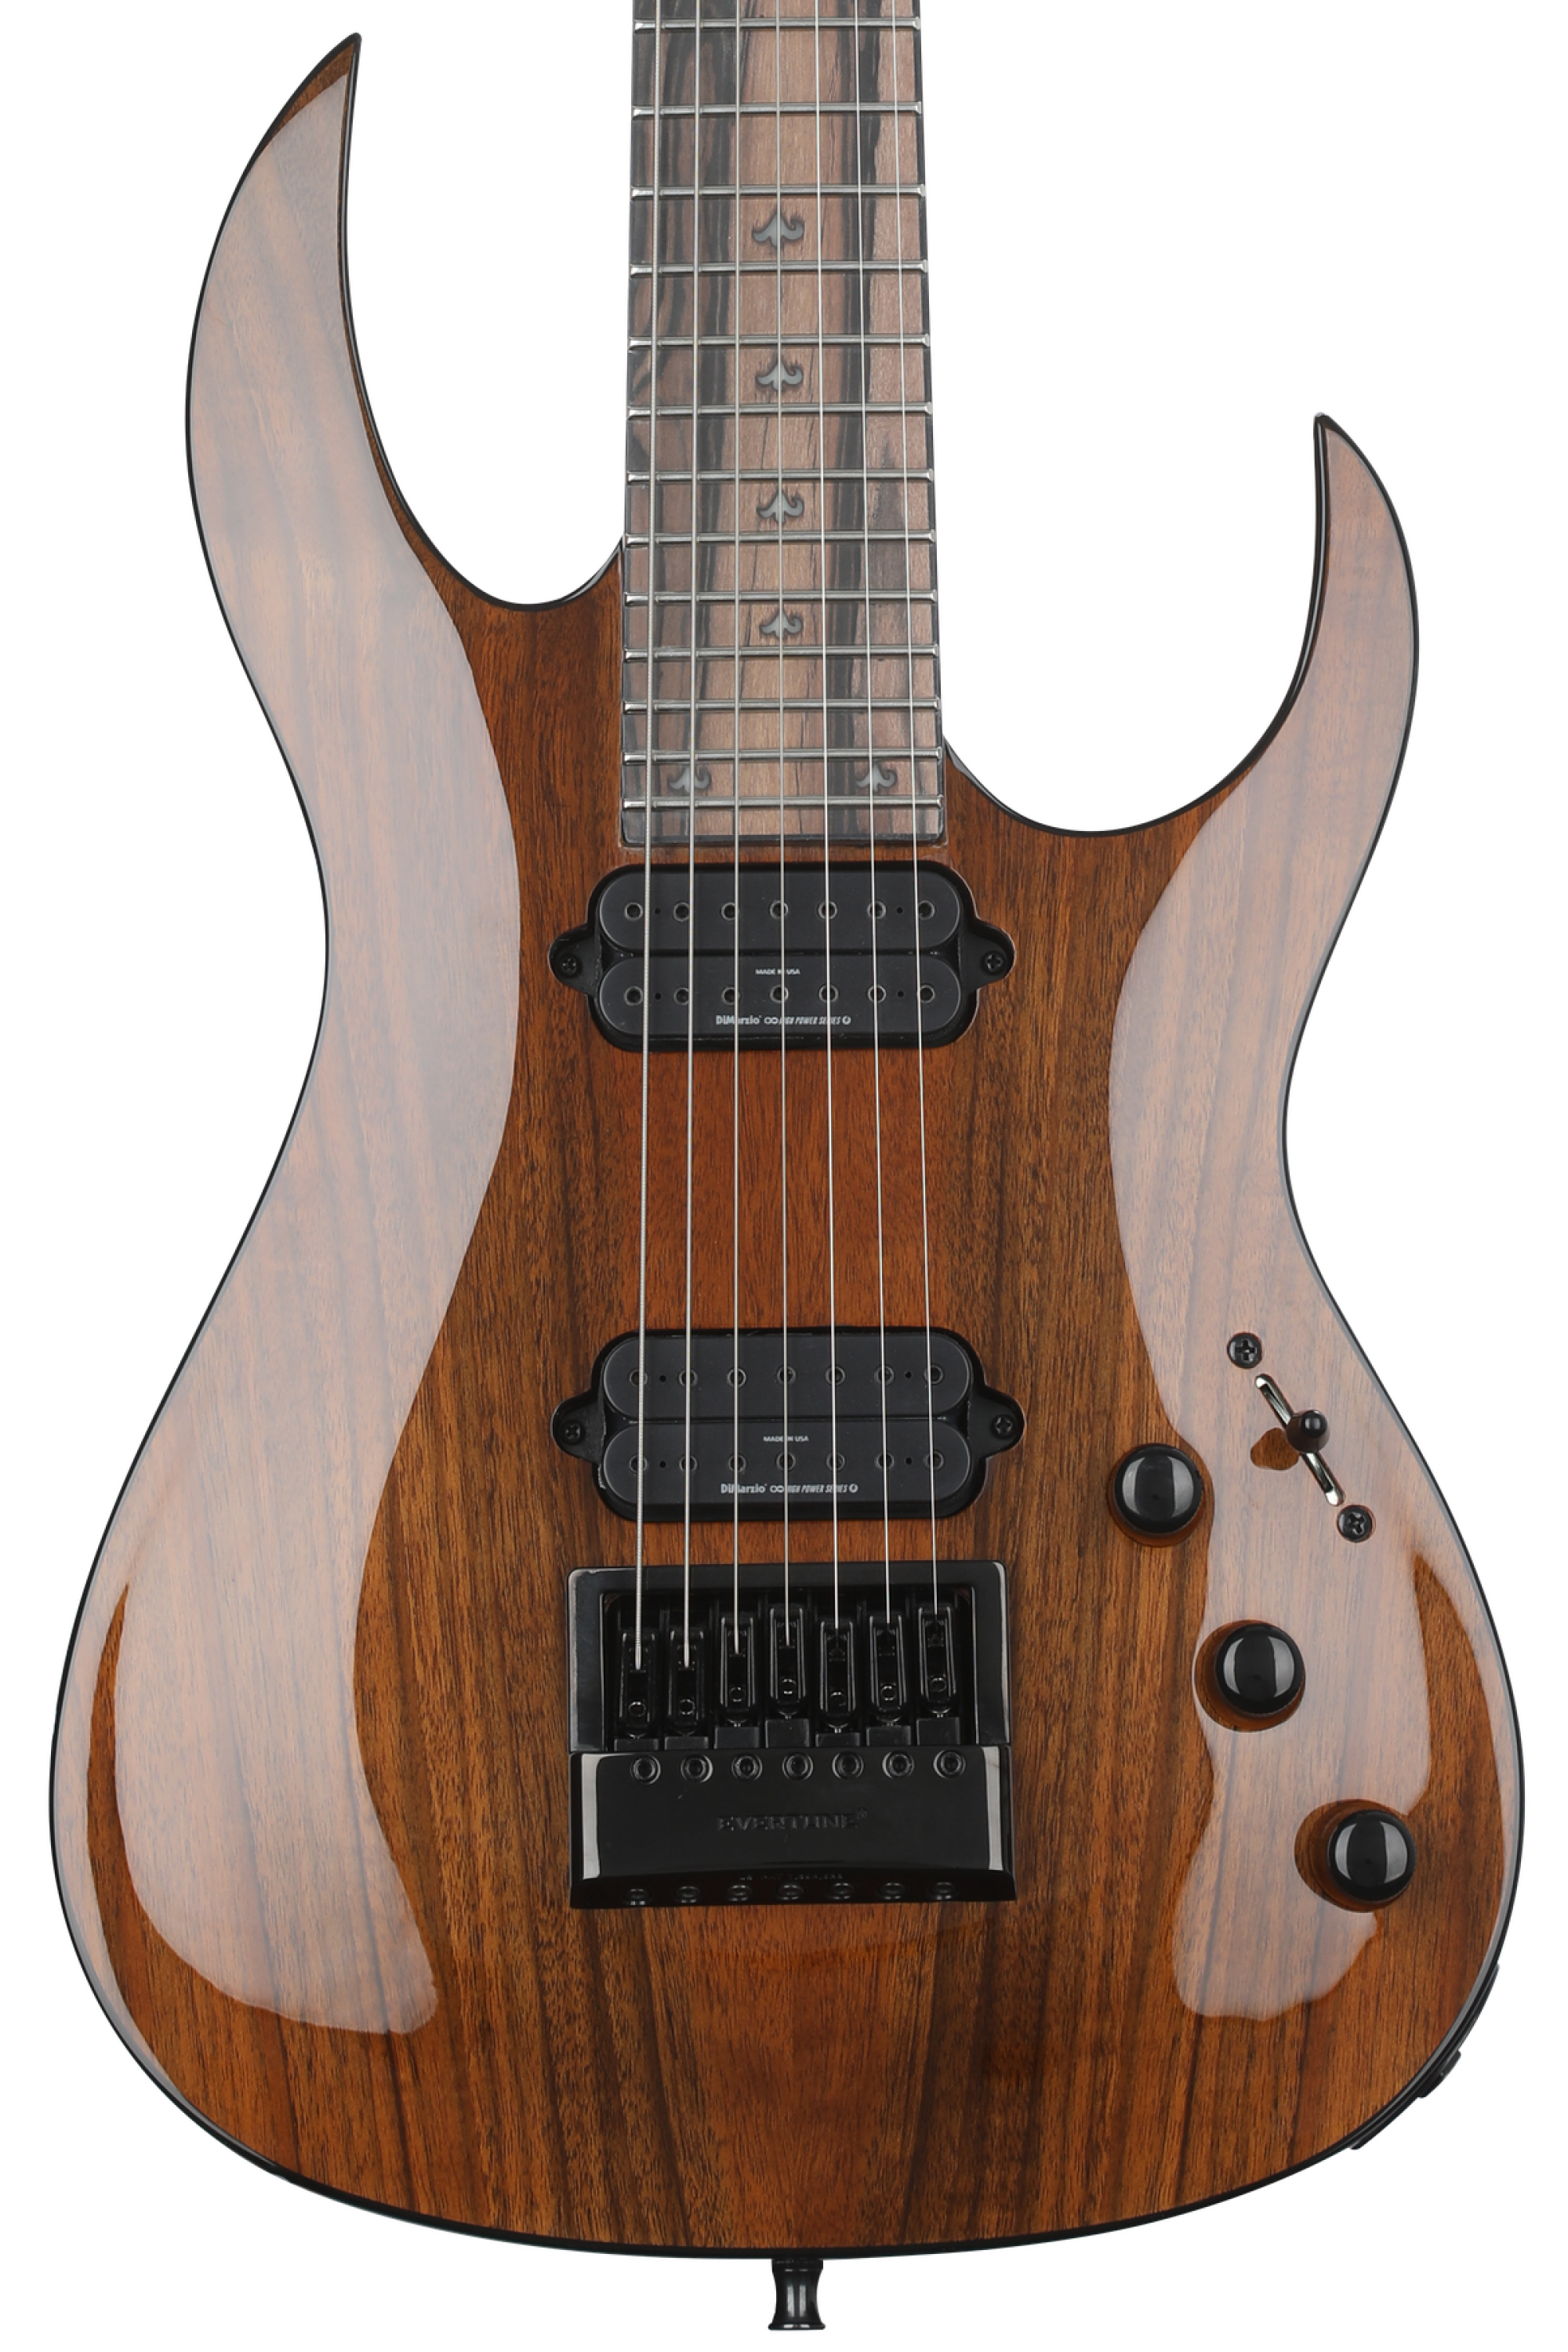 B.C. Rich Shredzilla Prophecy 7 Archtop 7-string Electric Guitar 